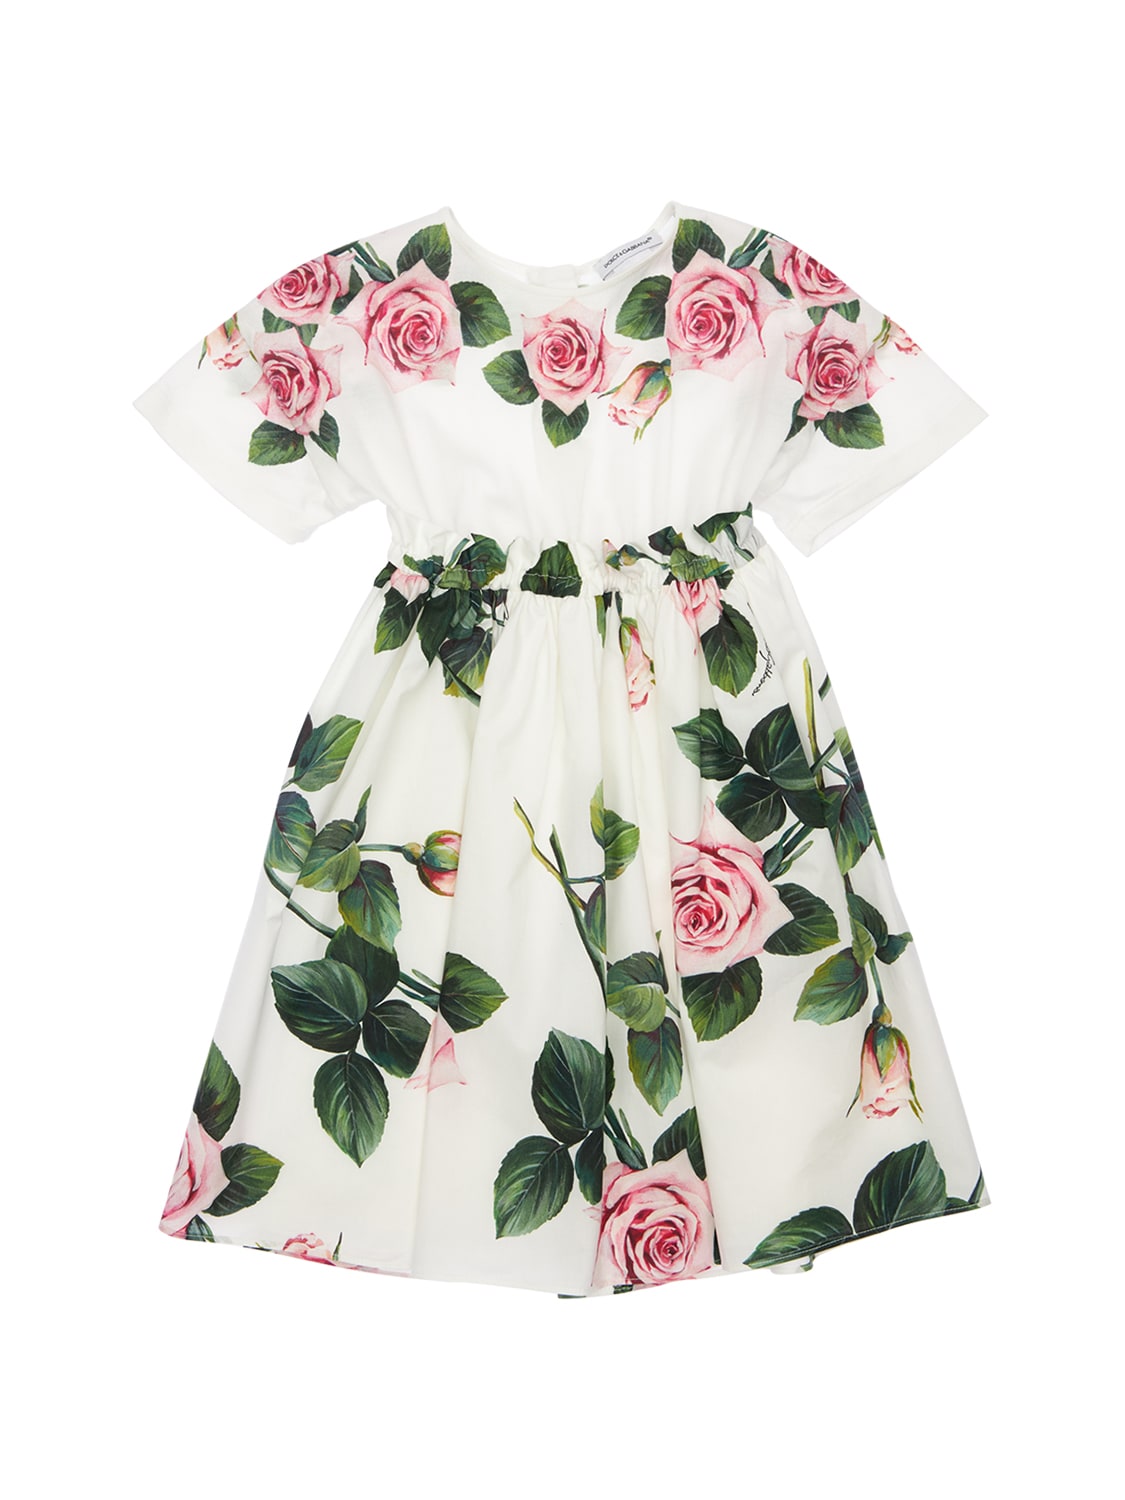 Dolce & Gabbana Kids' Girl's Rose Print Combo Knit Top Dress, Size 8-12 In White